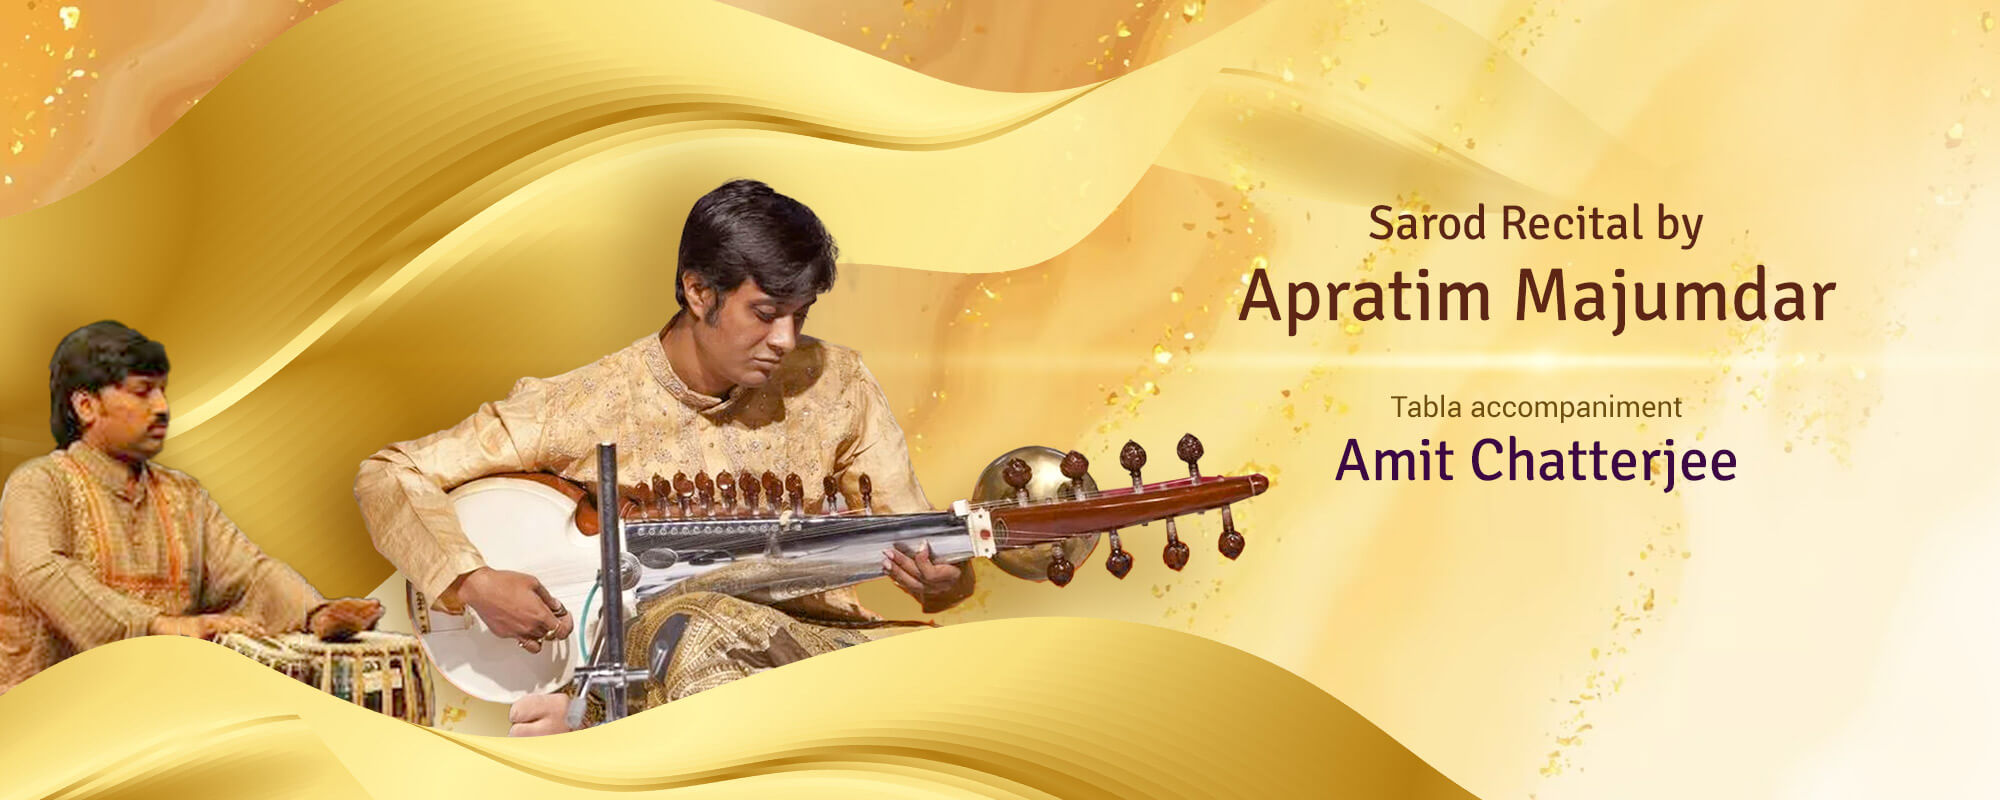 Sarod Recital concert - Apratim Majumdar and Amit Chatterjee